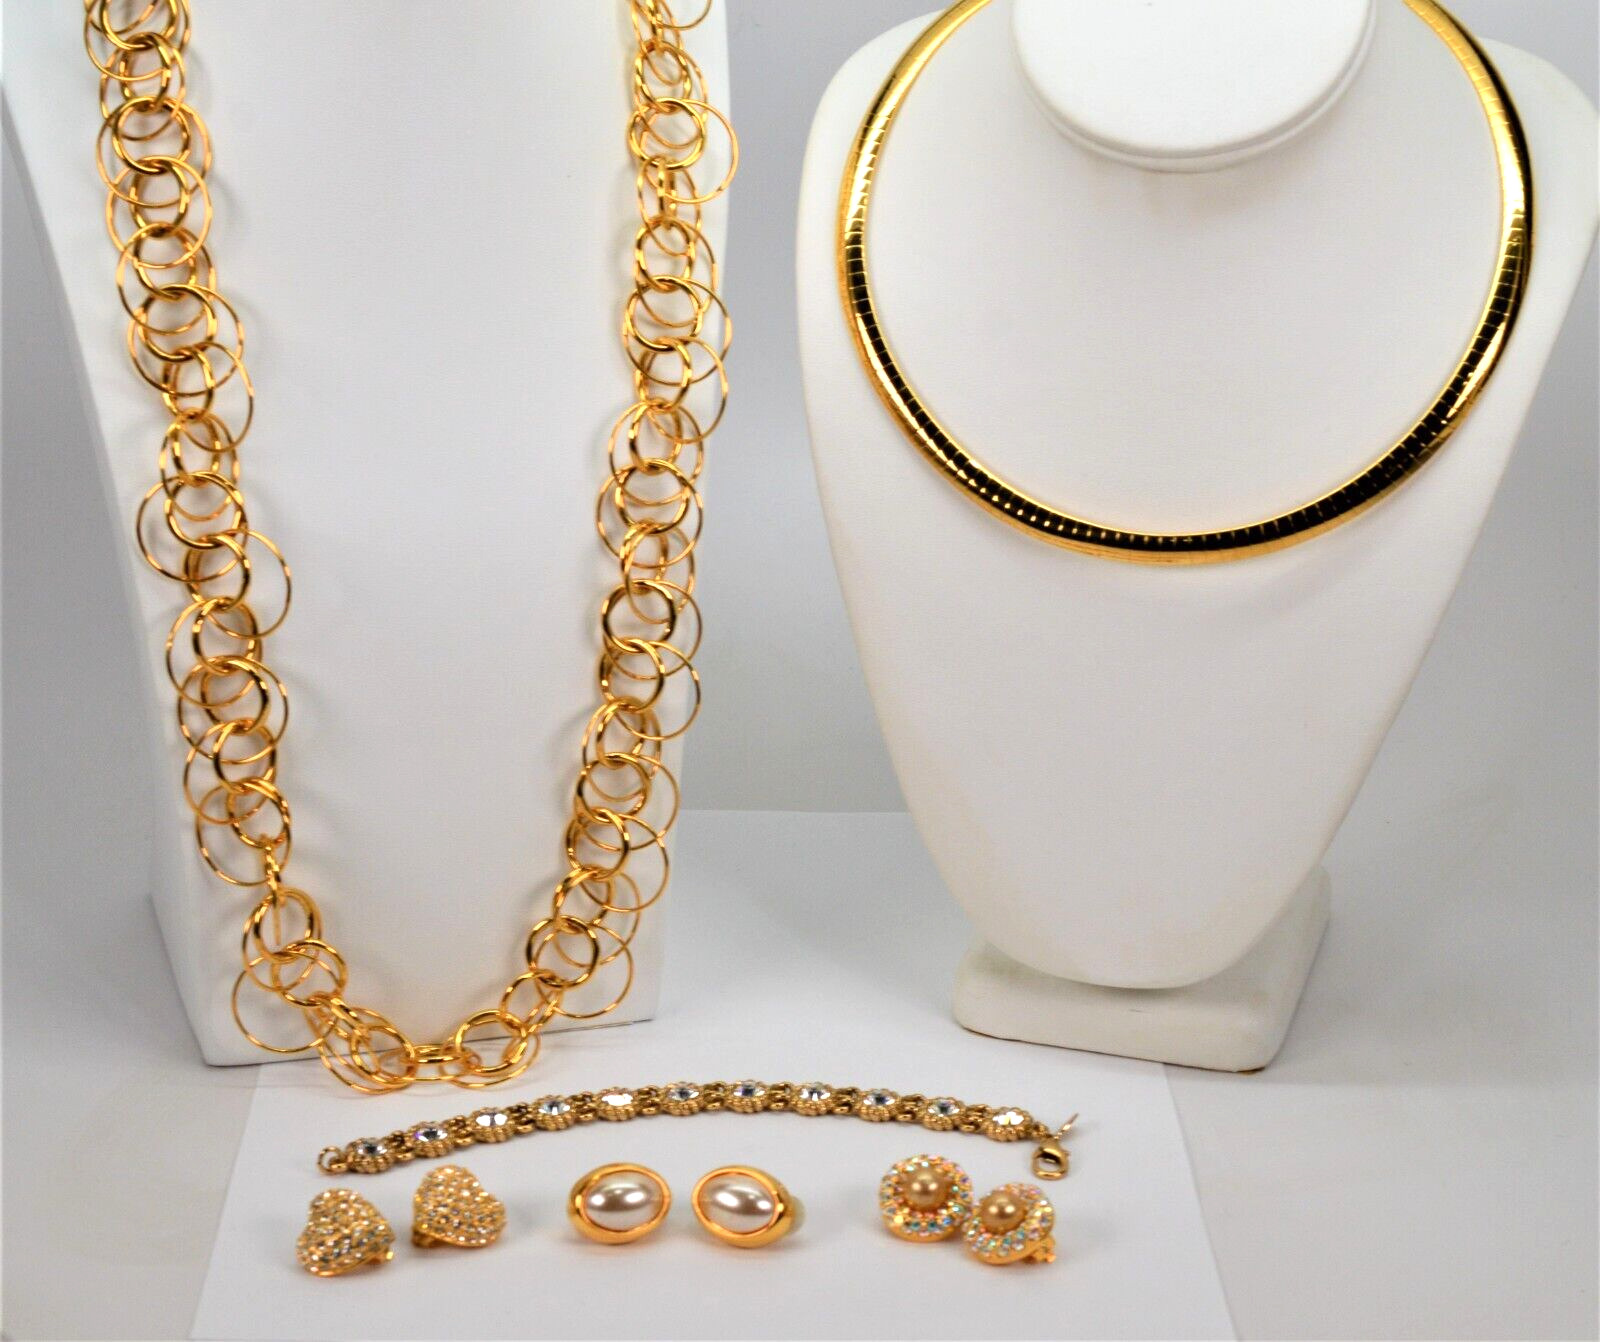 Vintage Joan Rivers Jewelry Lot - image 1